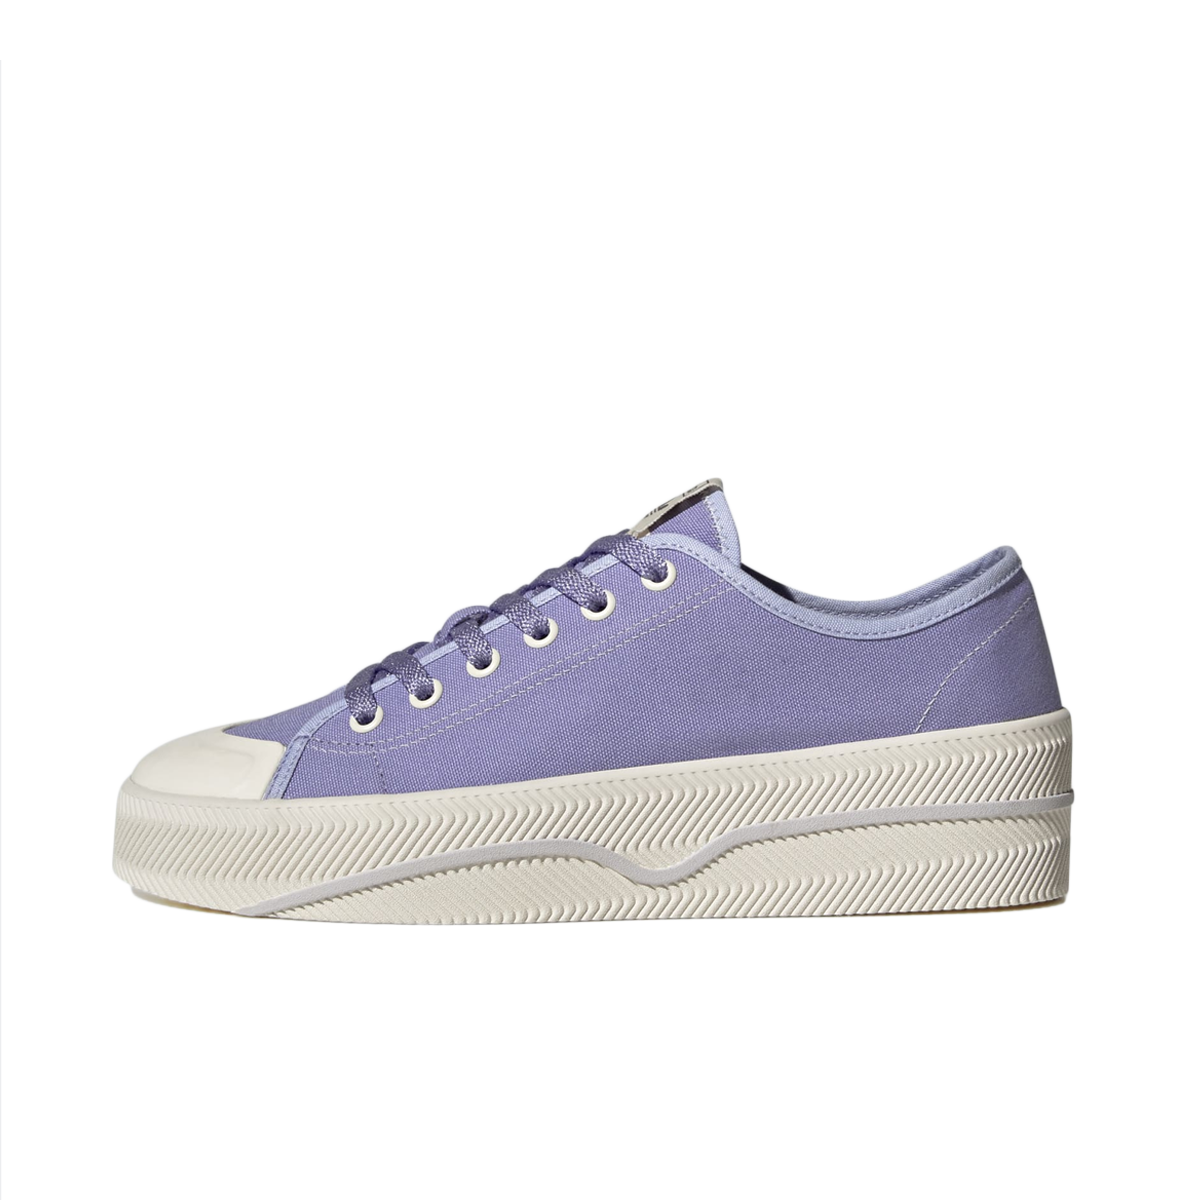 Nuevas Adidas Nizza 2 Baja Originals Zapatos Tenis-luz púrpura GW4489 